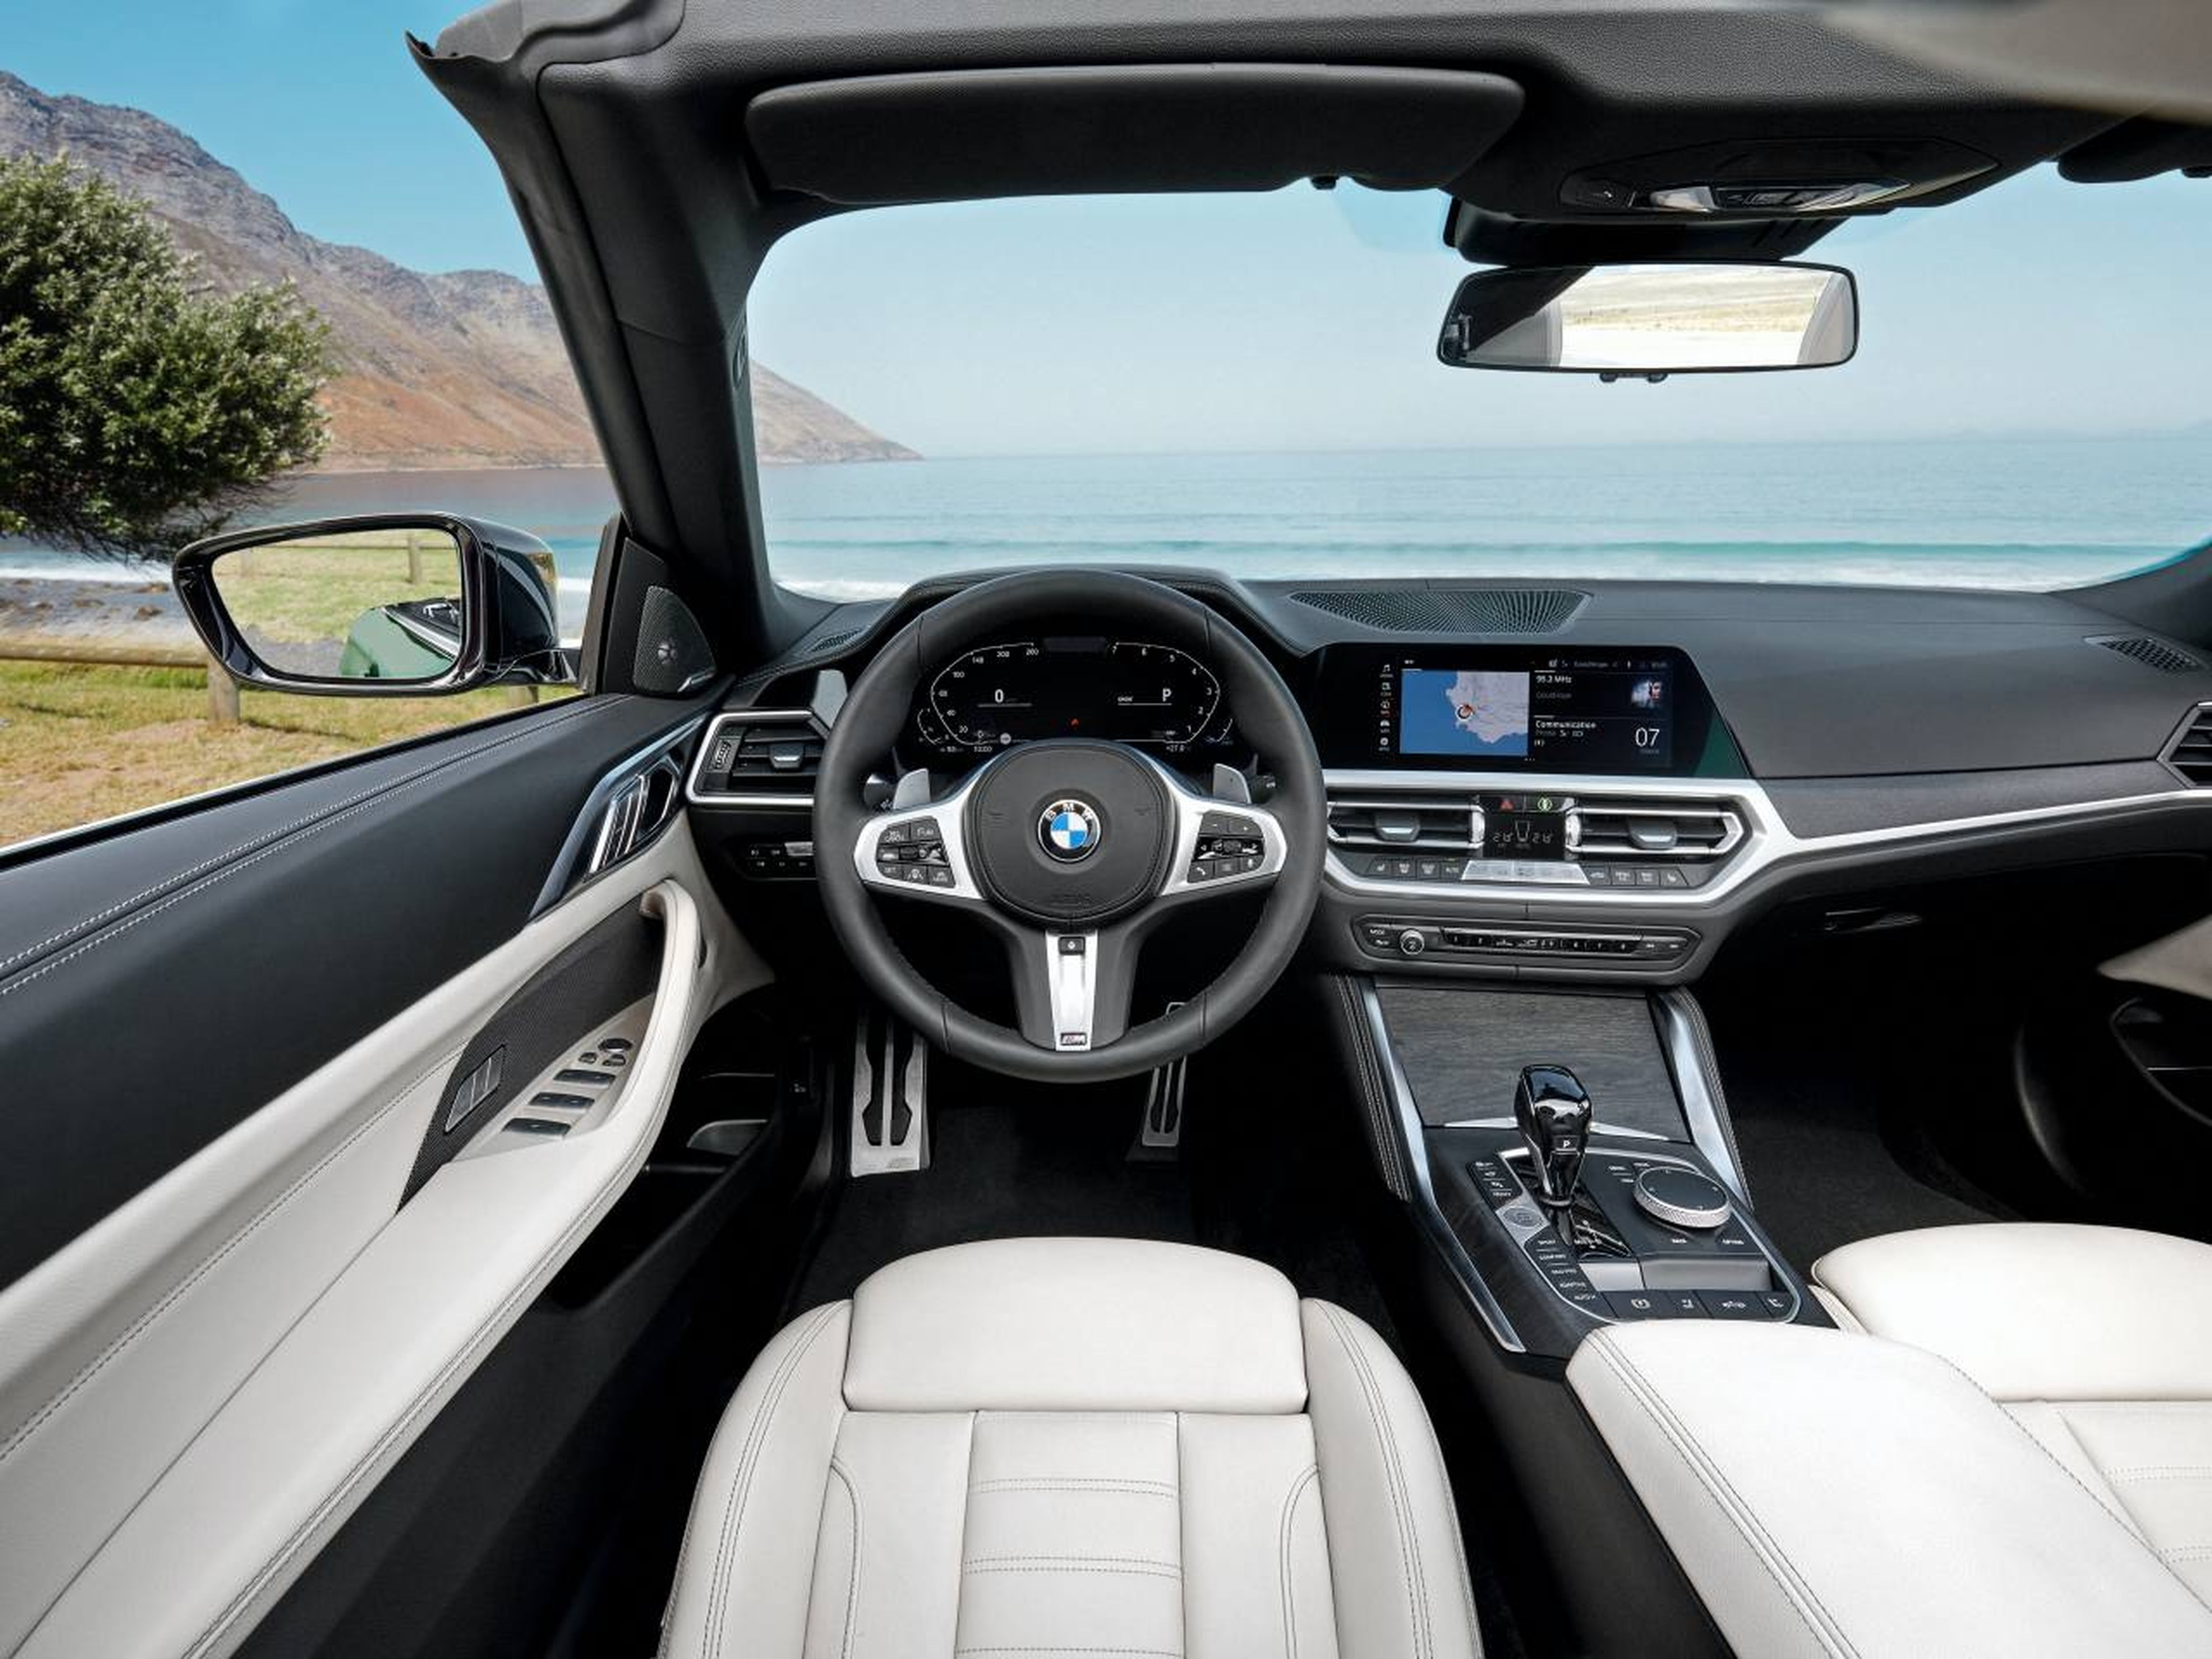 BMW Serie 4 Cabrio interior